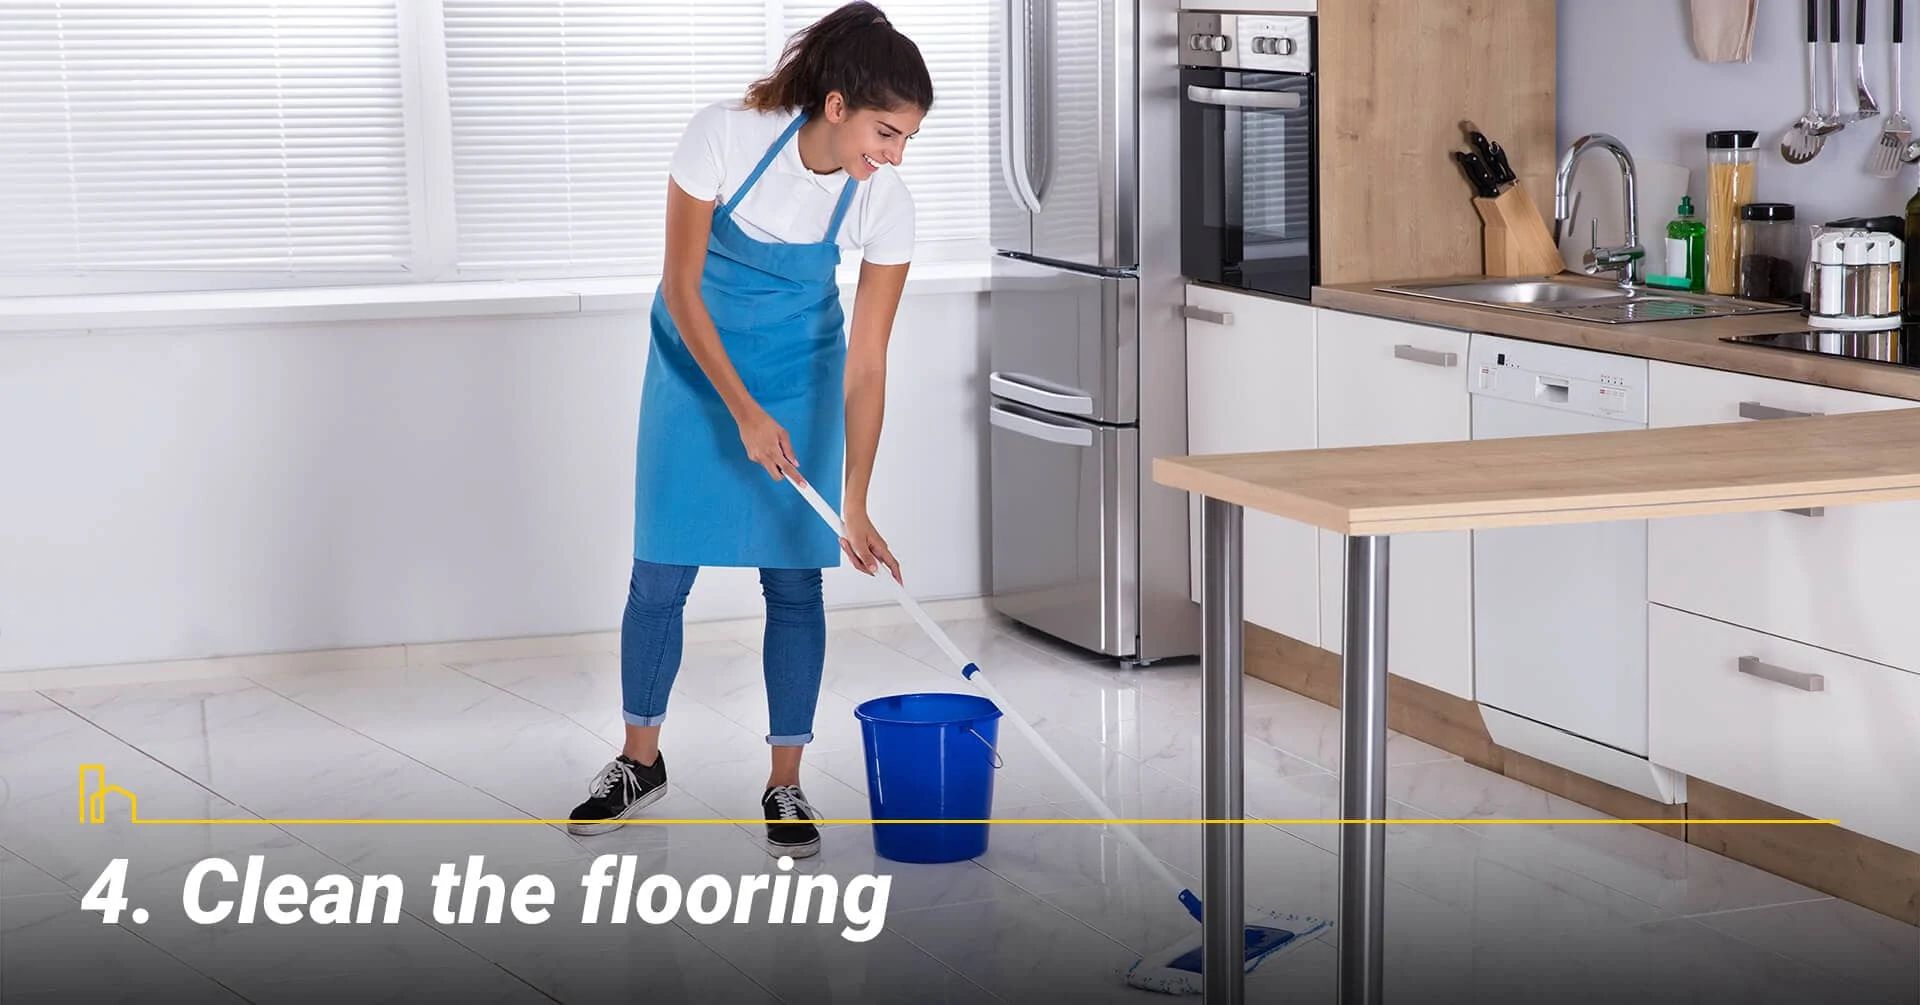 Clean the flooring, keep the floor clean